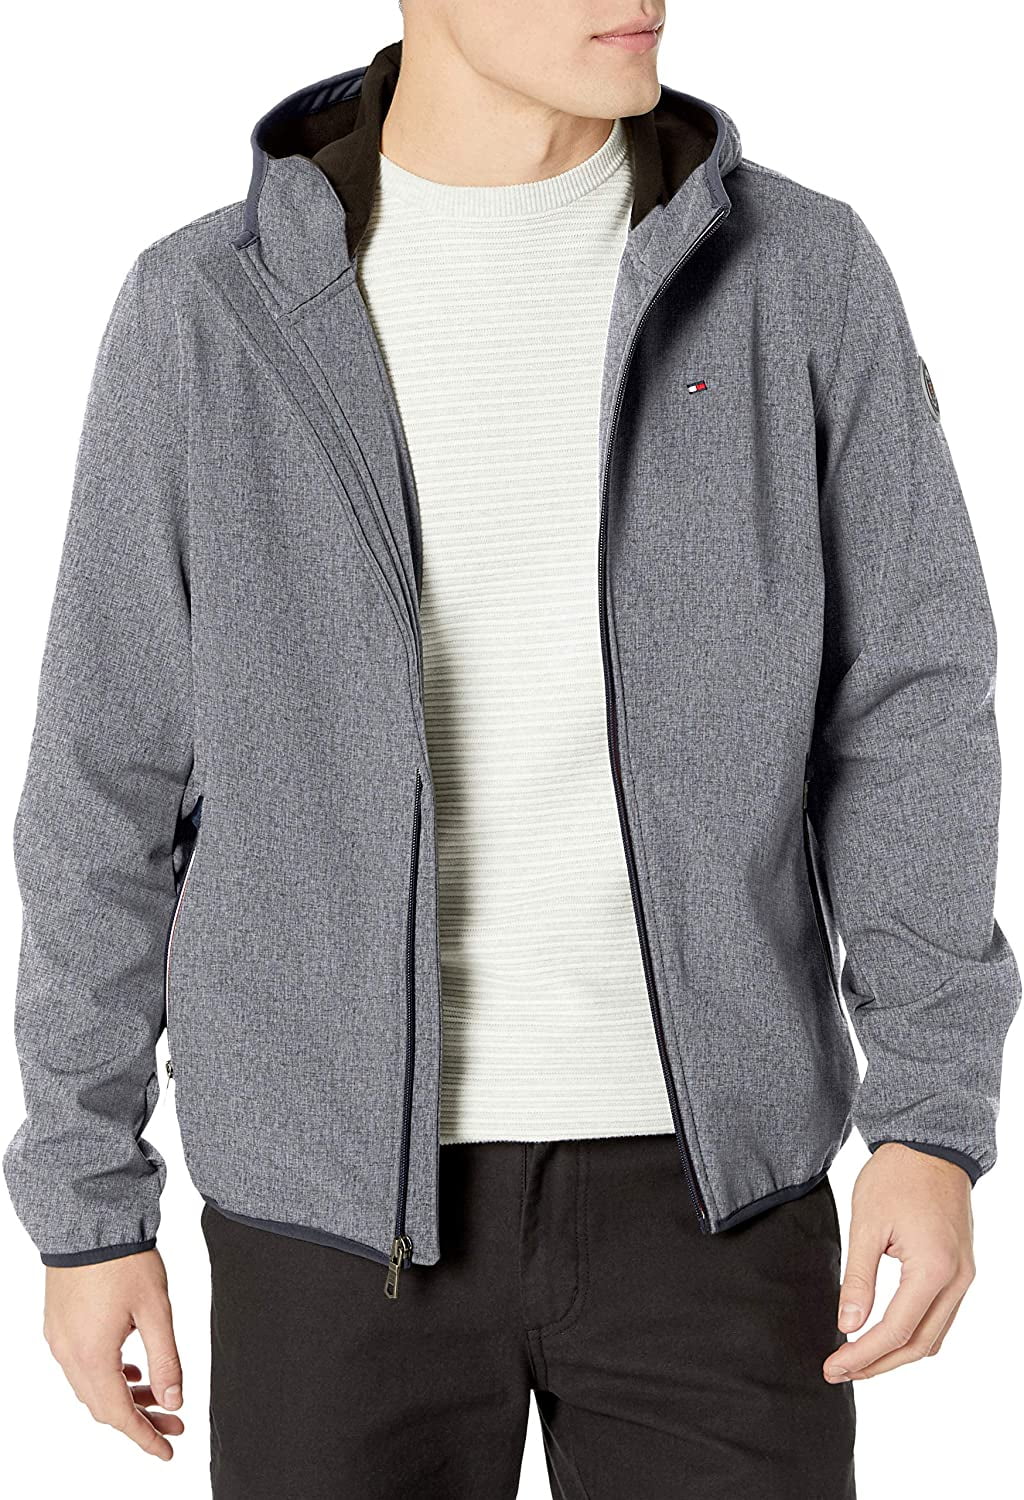 tommy hilfiger men's hooded performance fleece jacket